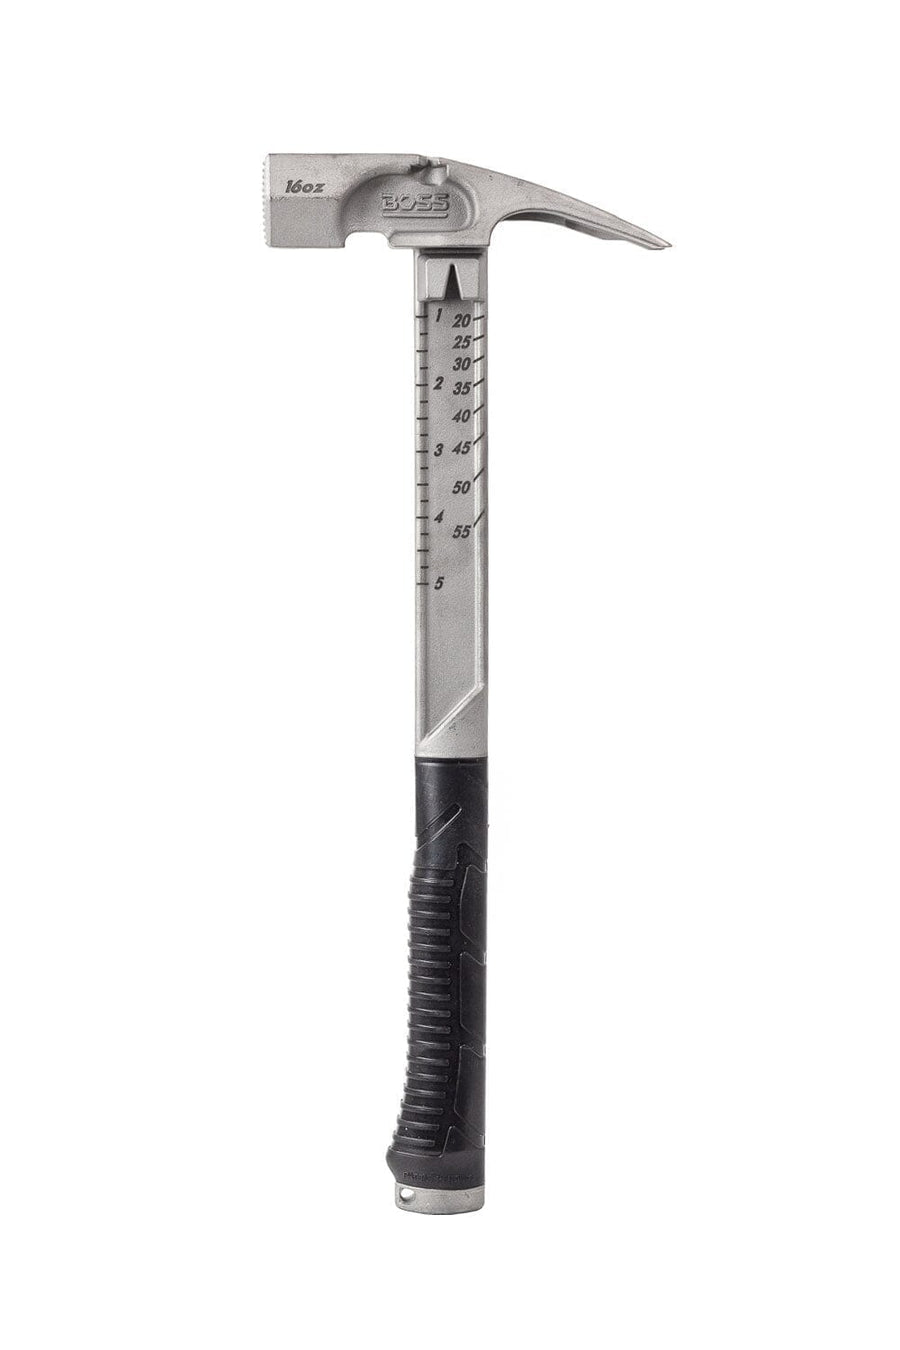 NEW Pro Plus Series Titanium Hammer Titanium Boss Hammer Co. 16 oz Milled Face 